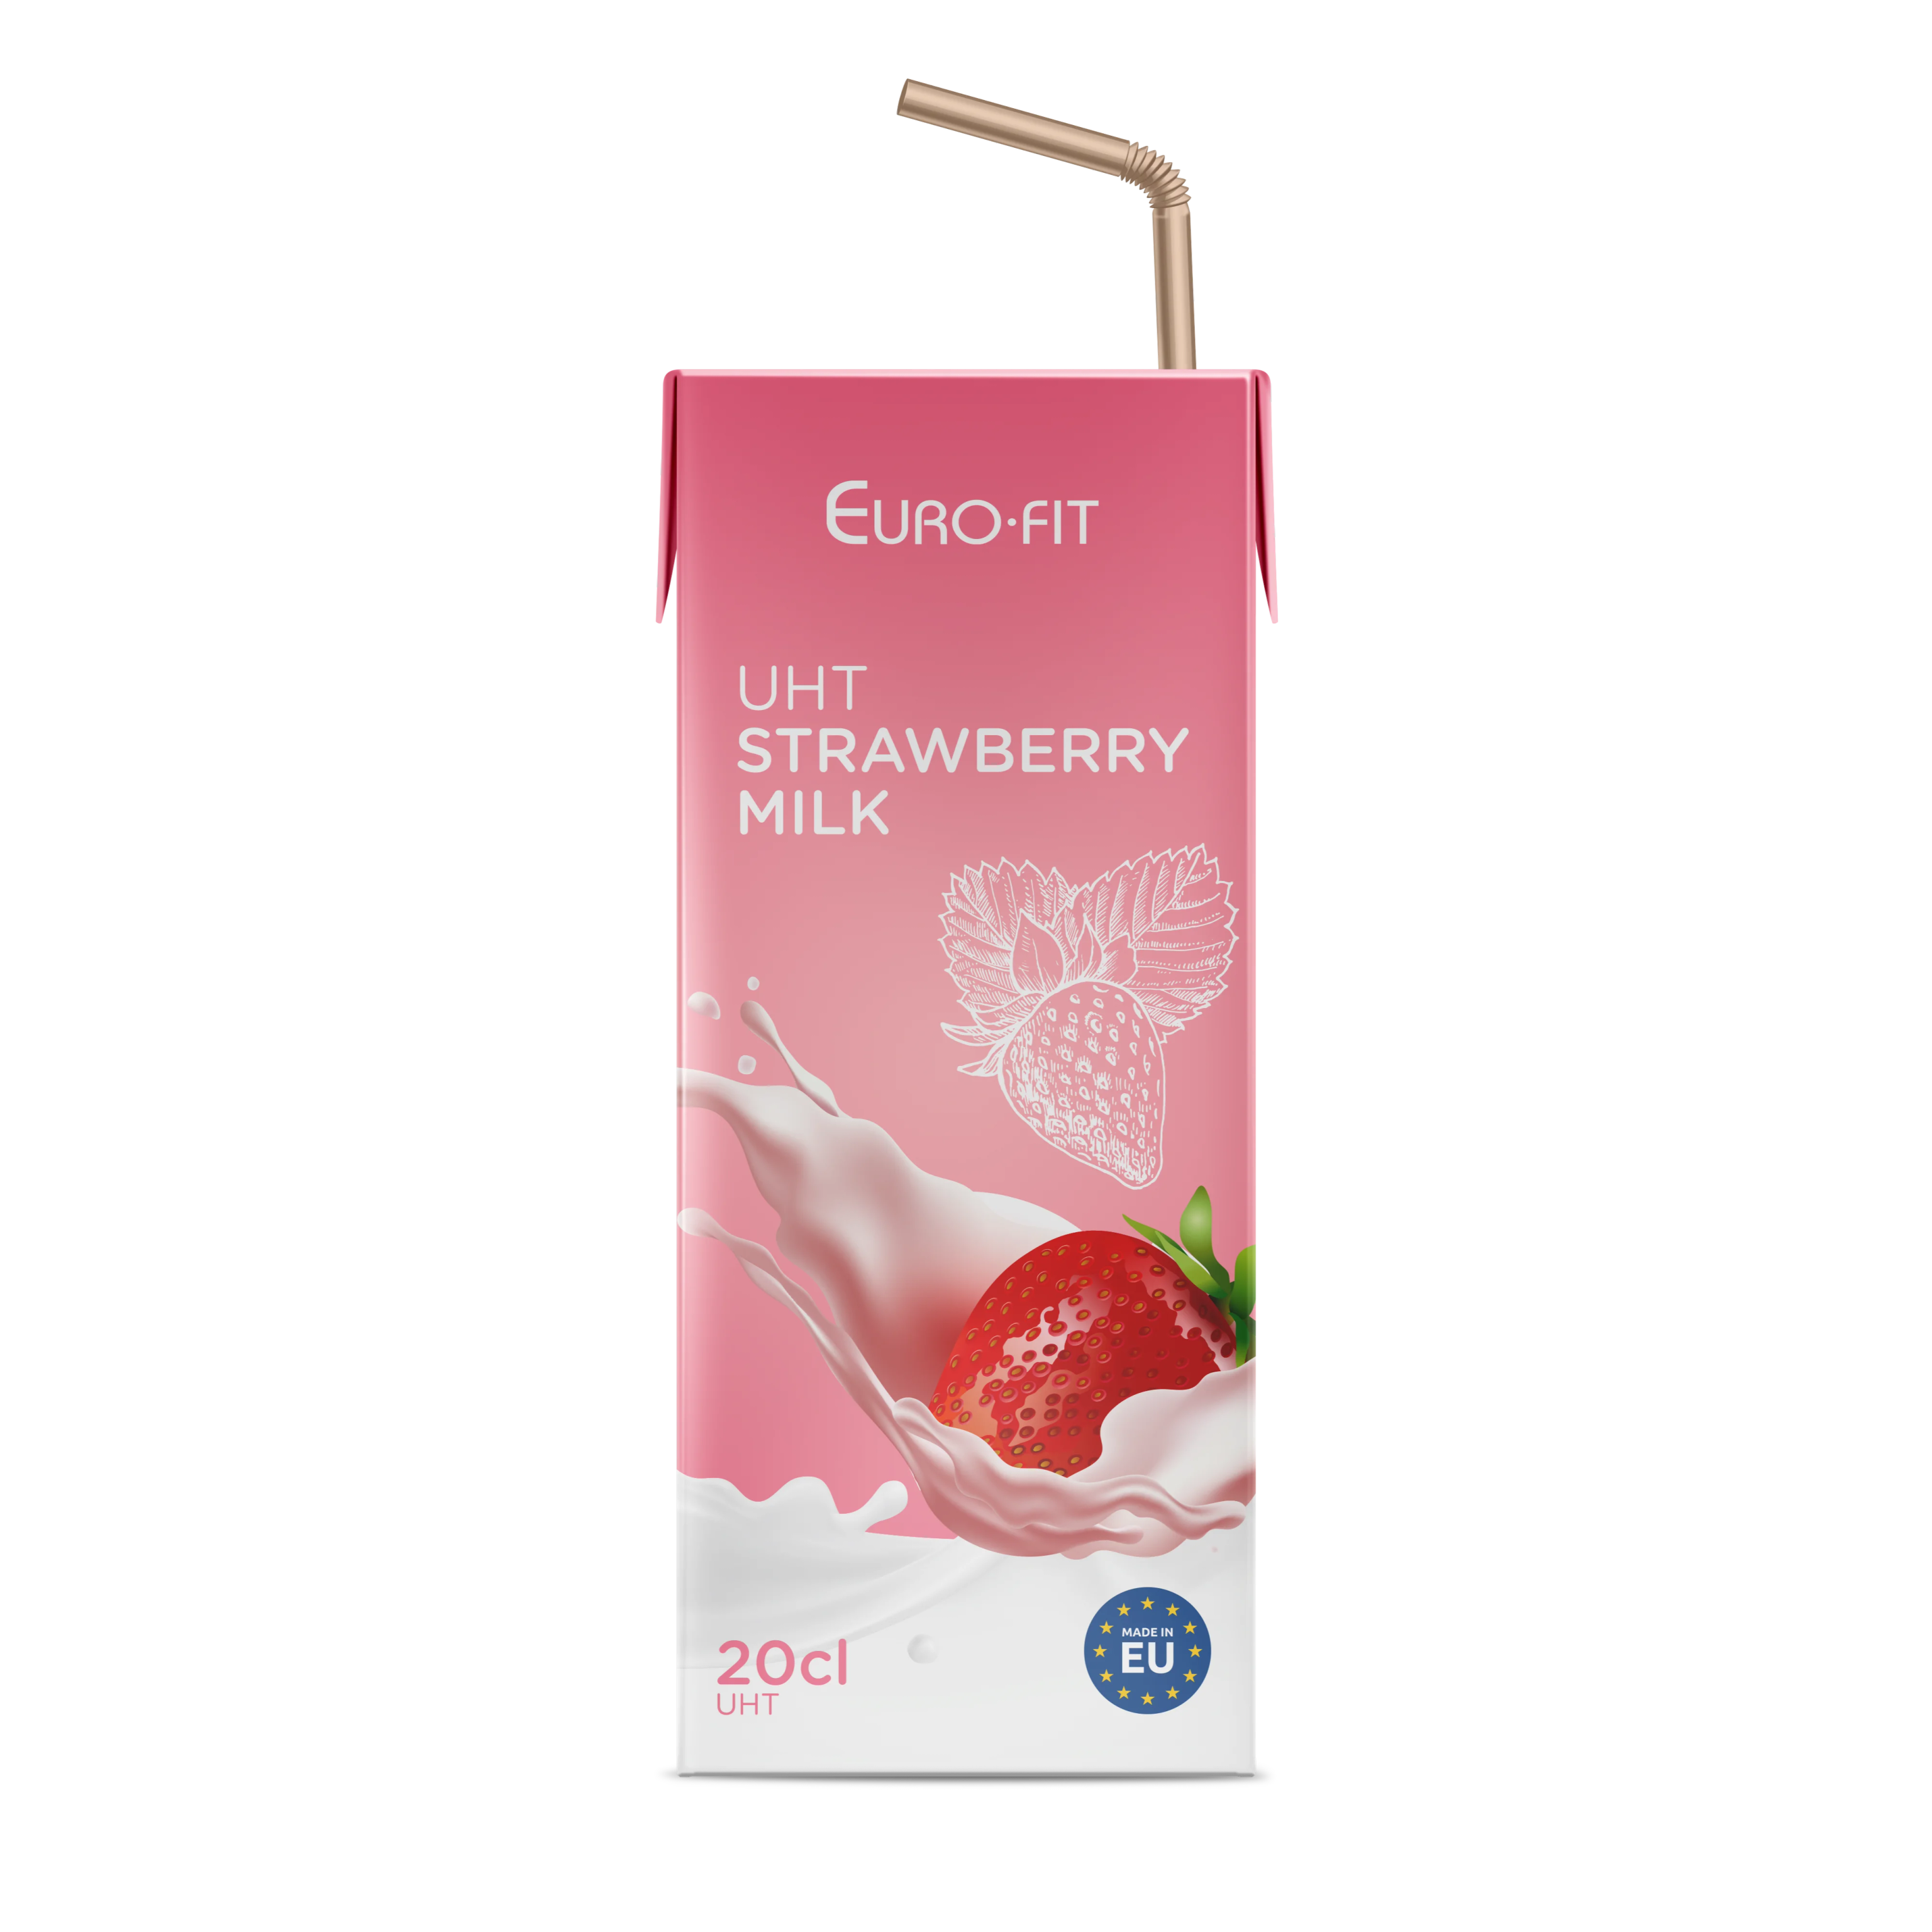 UHT strawberry milk